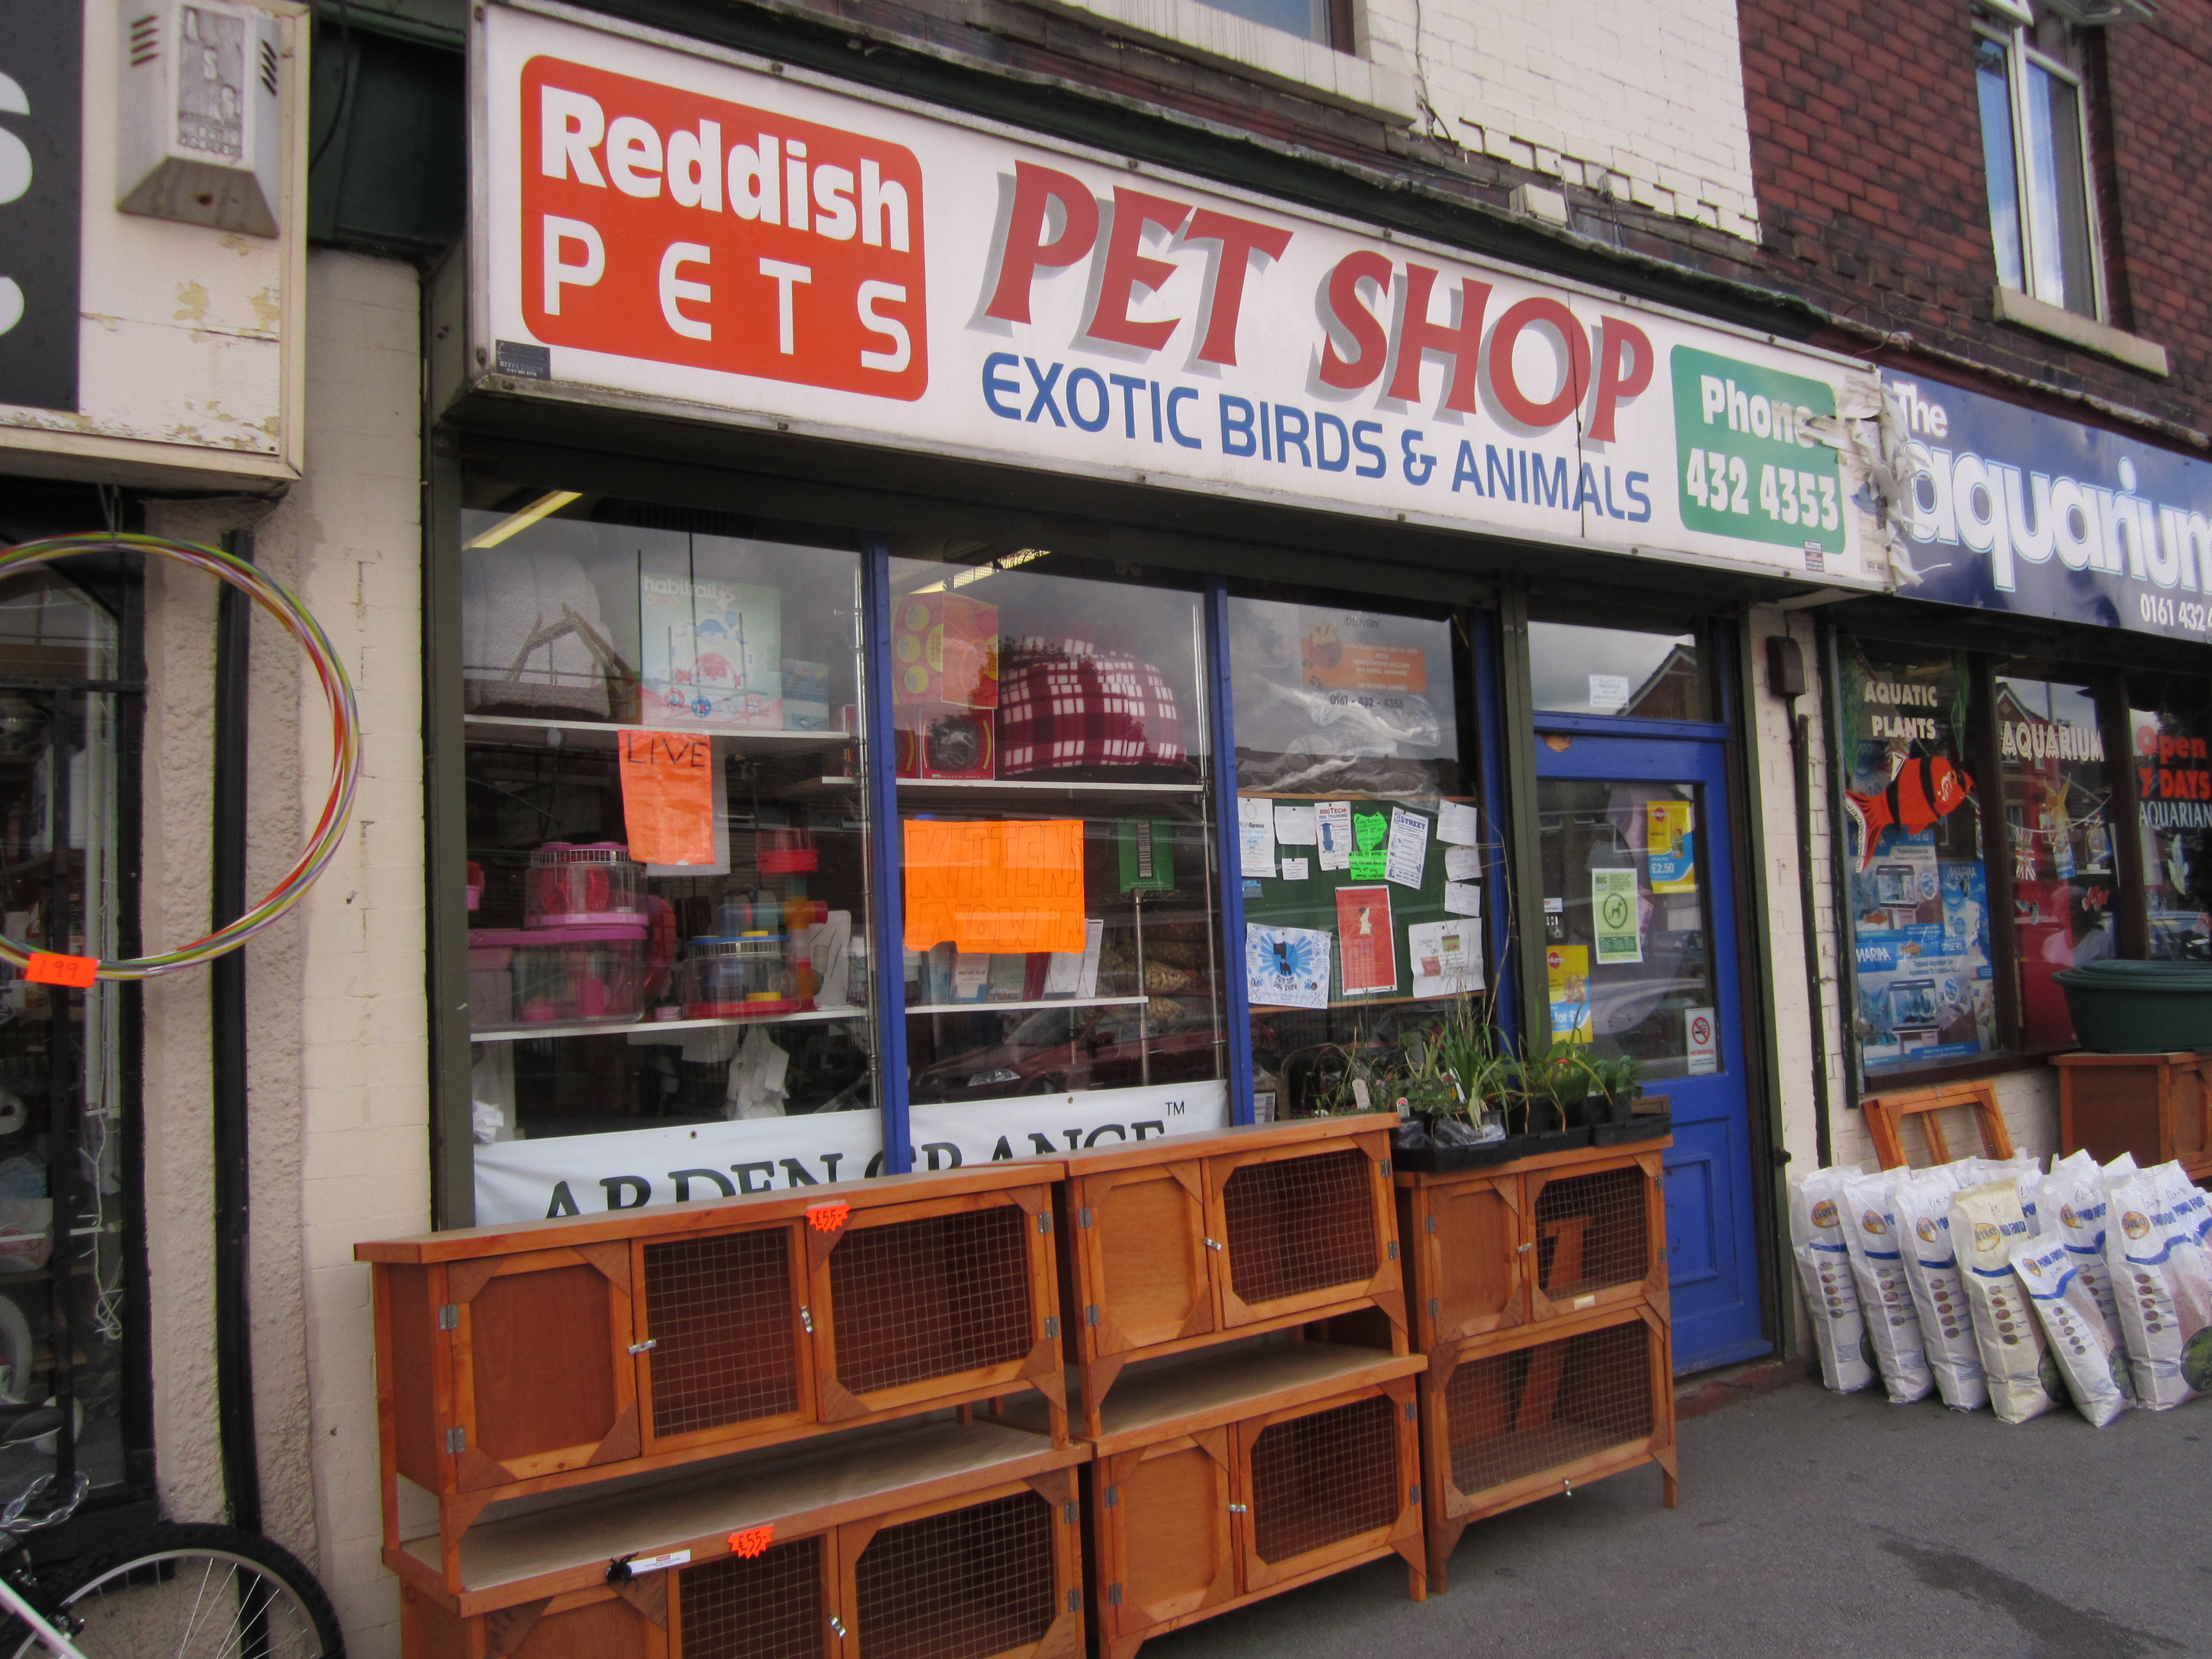 File:Pet shop, Reddish.JPG - Wikimedia Commons